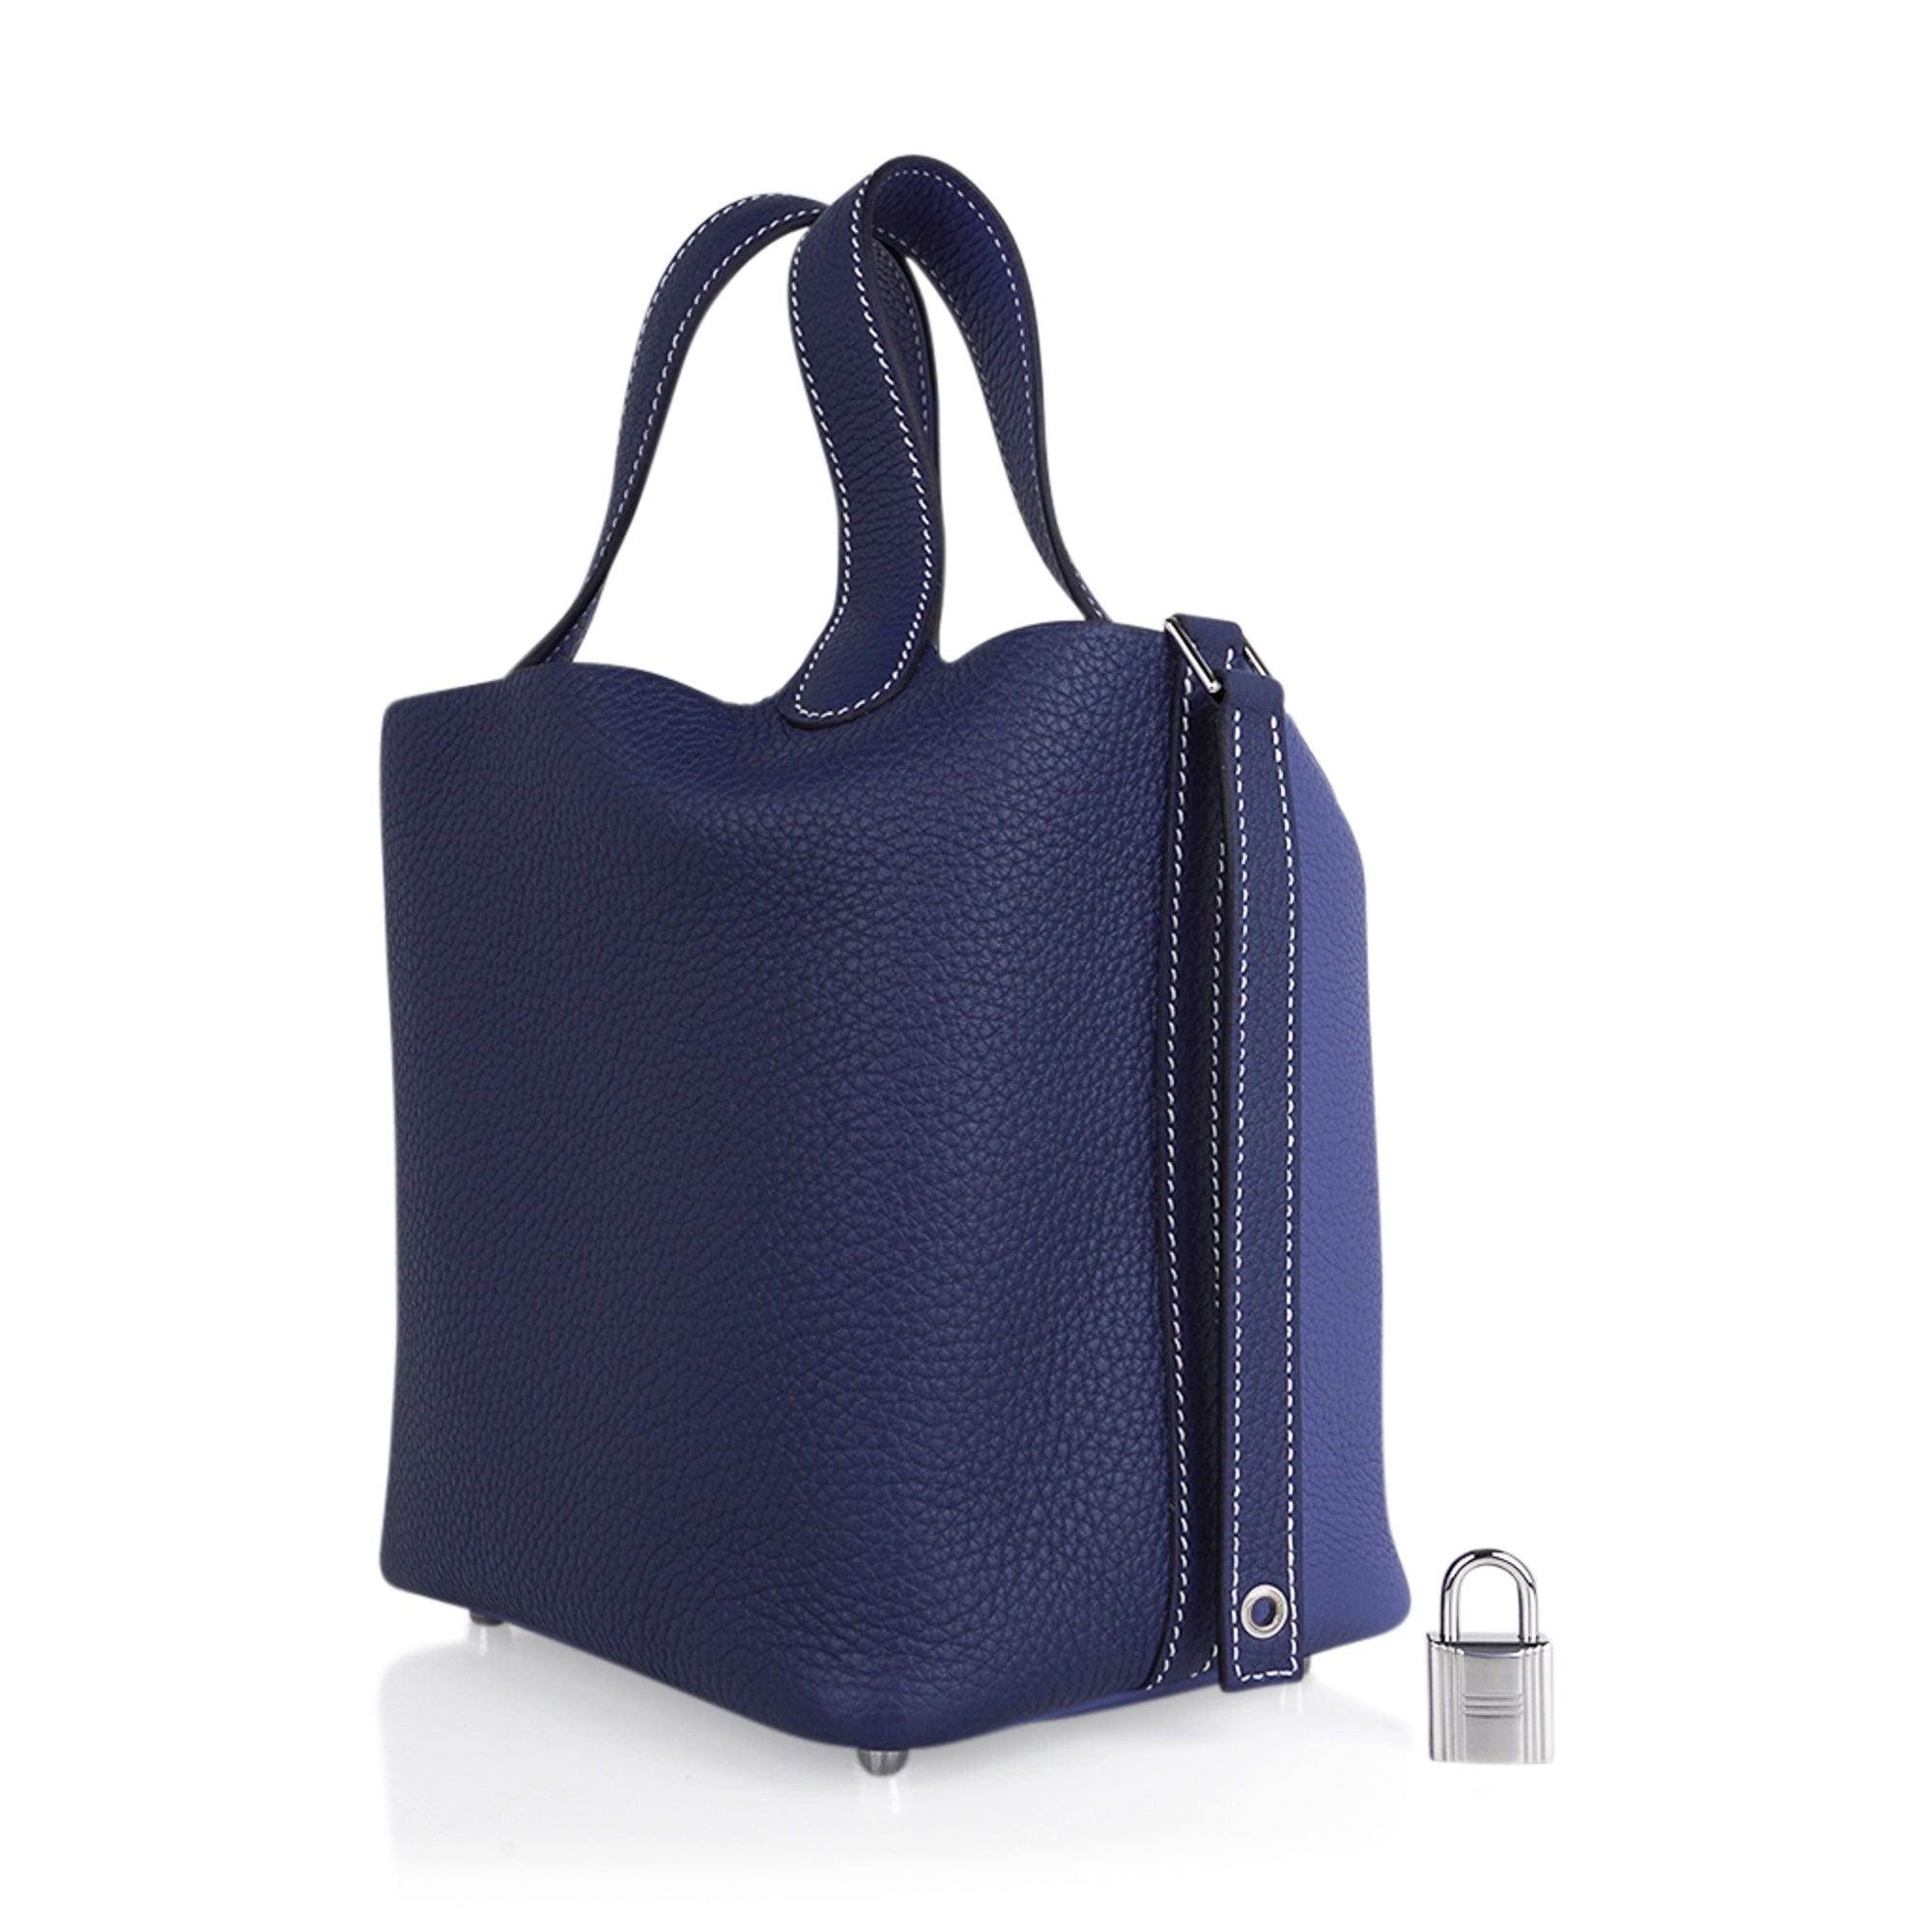 Hermes Picotin Eclat Lock 18 Bag Bleu Saphir / Bleu Brighton